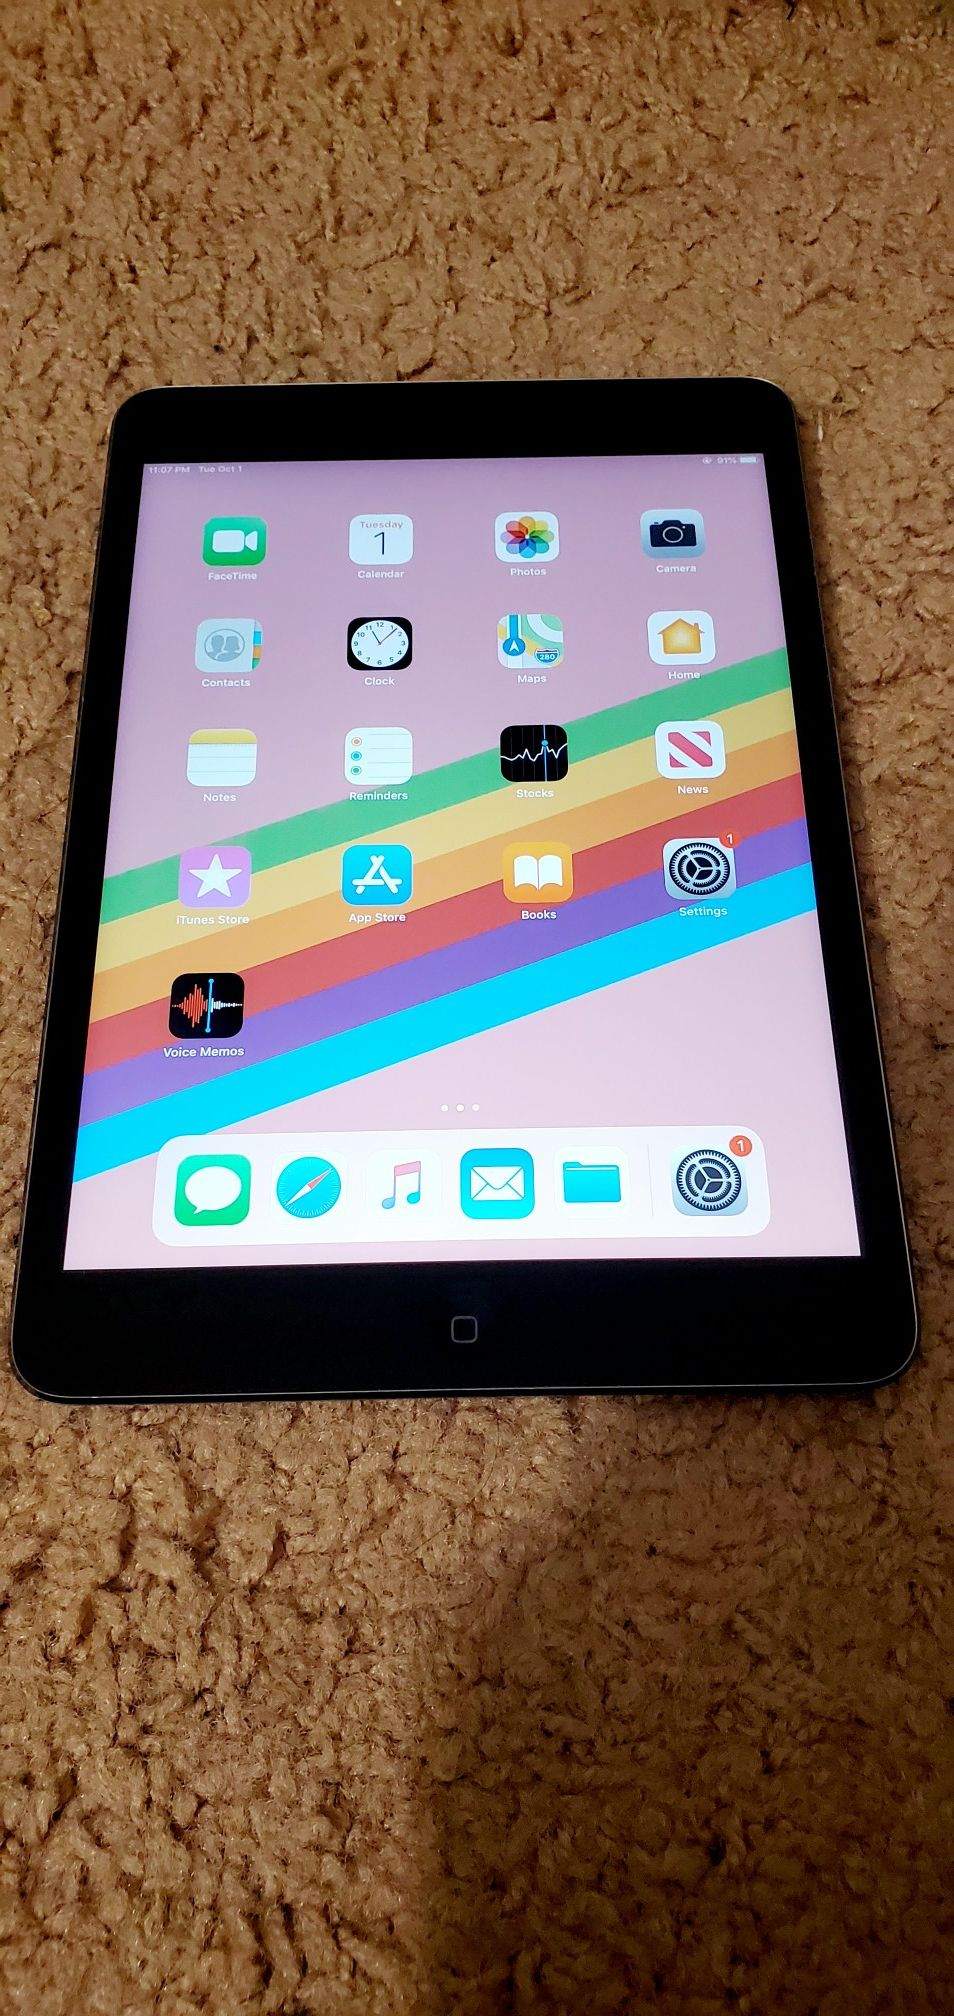 iPad mini 2 iCloud unlocked